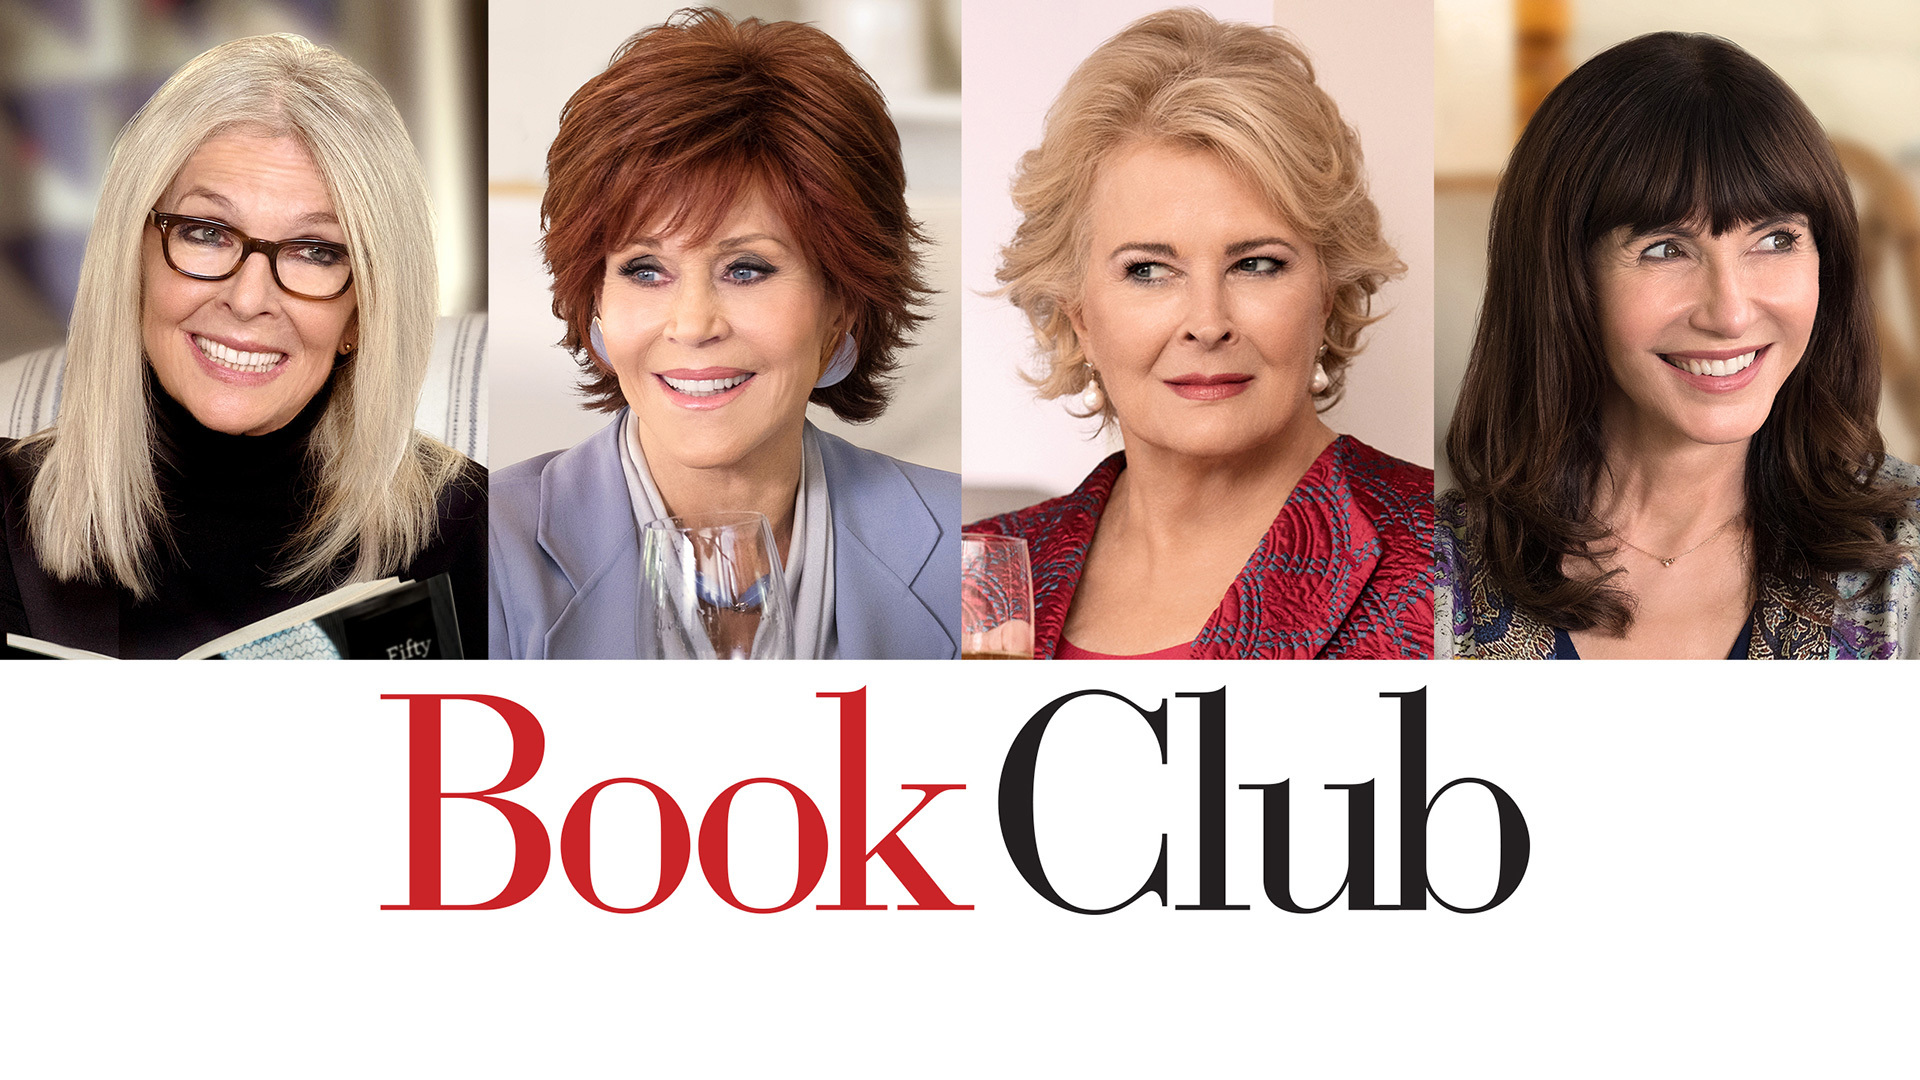 Book Club - Watch Full Movie on Paramount Plus